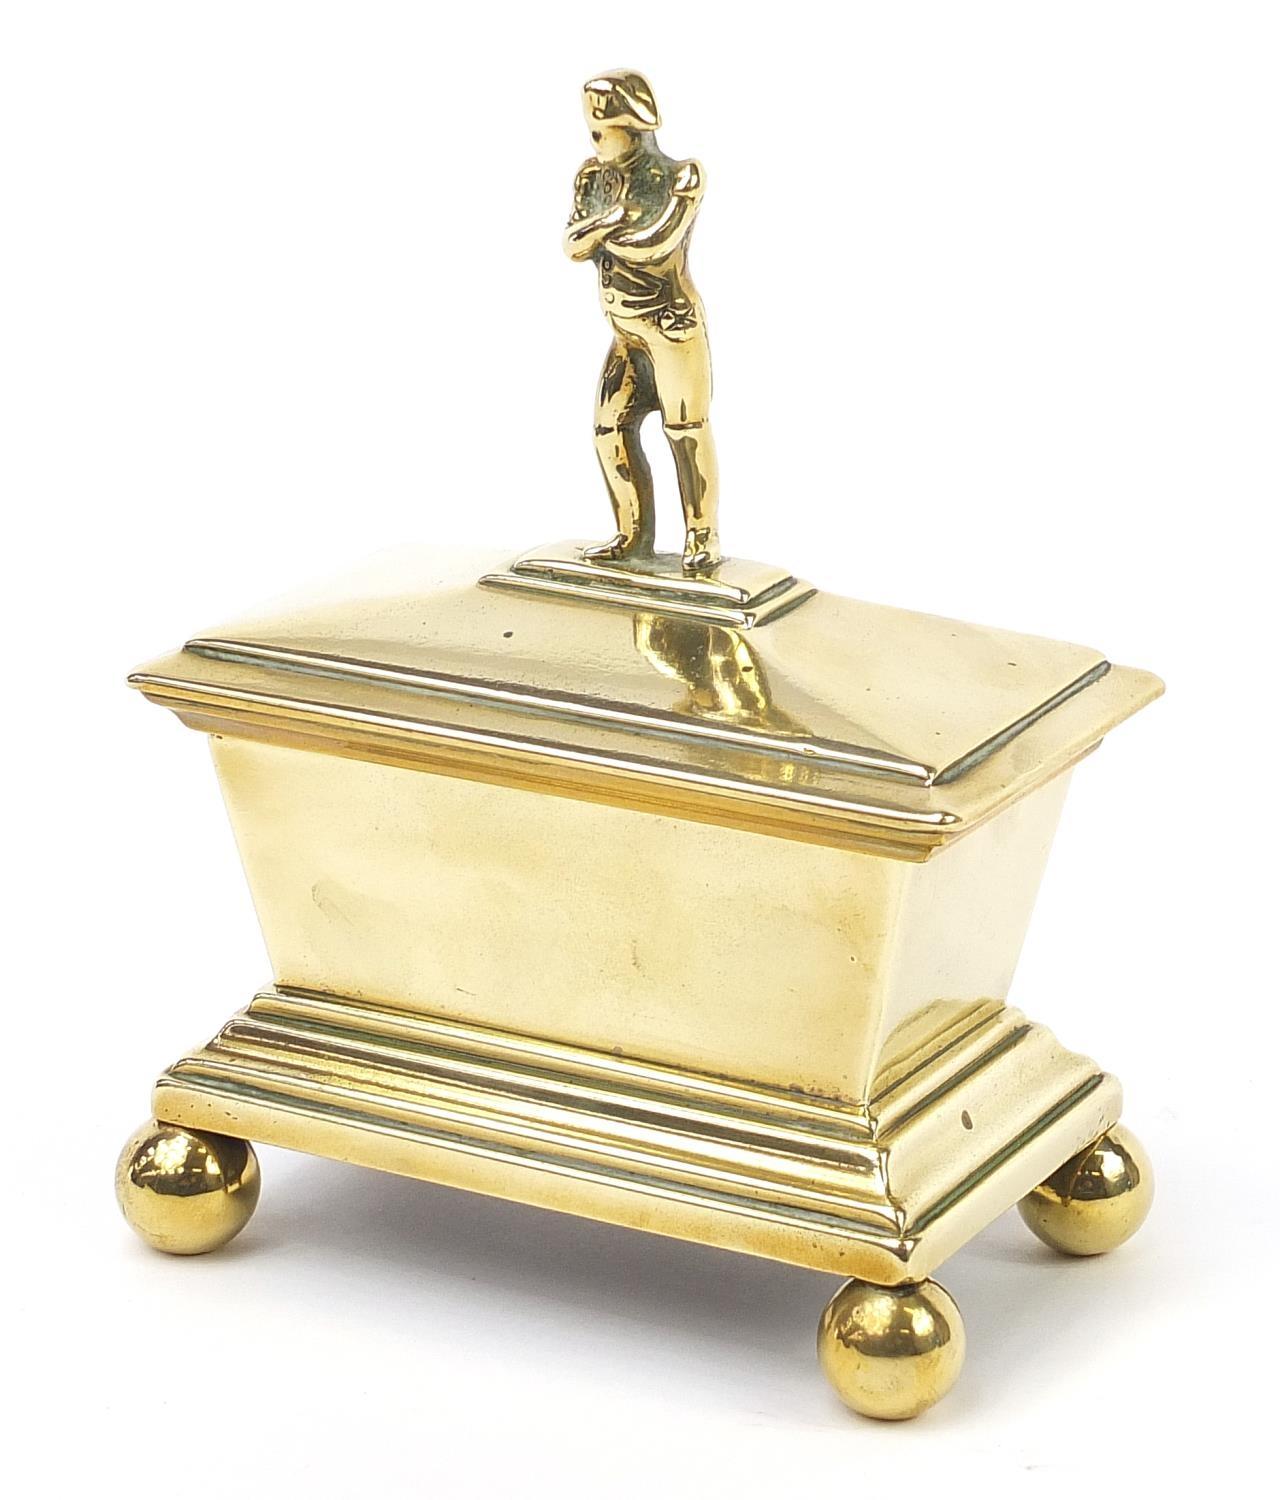 Victorian Napoleon design tobacco box with lead lining, 16cm H x 11.5cm W x 9cm D